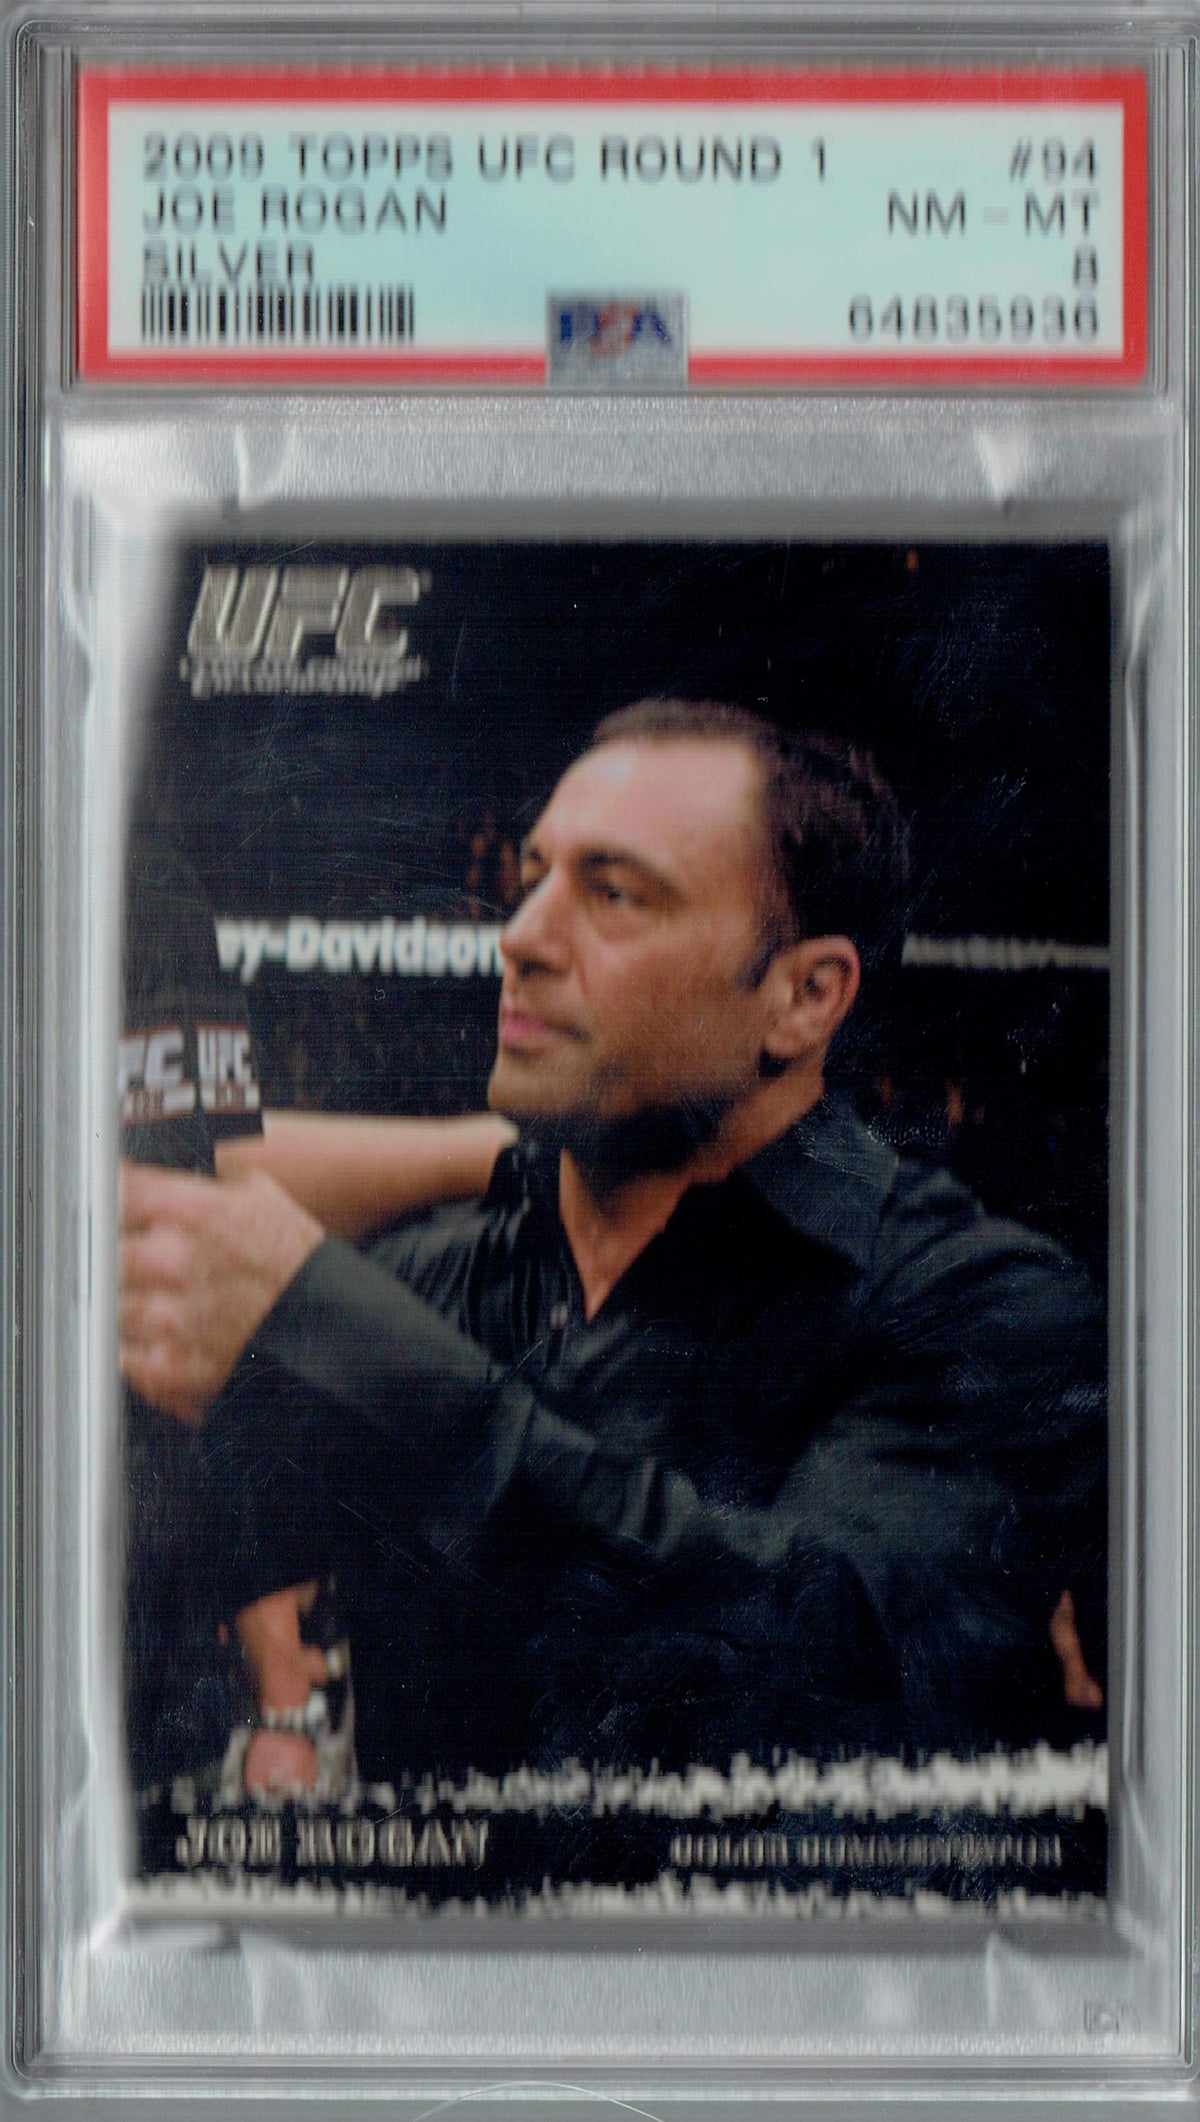 PSA 8 NM-MT Joe Rogan 2009 Topps UFC Round 1 #94 Rookie Card